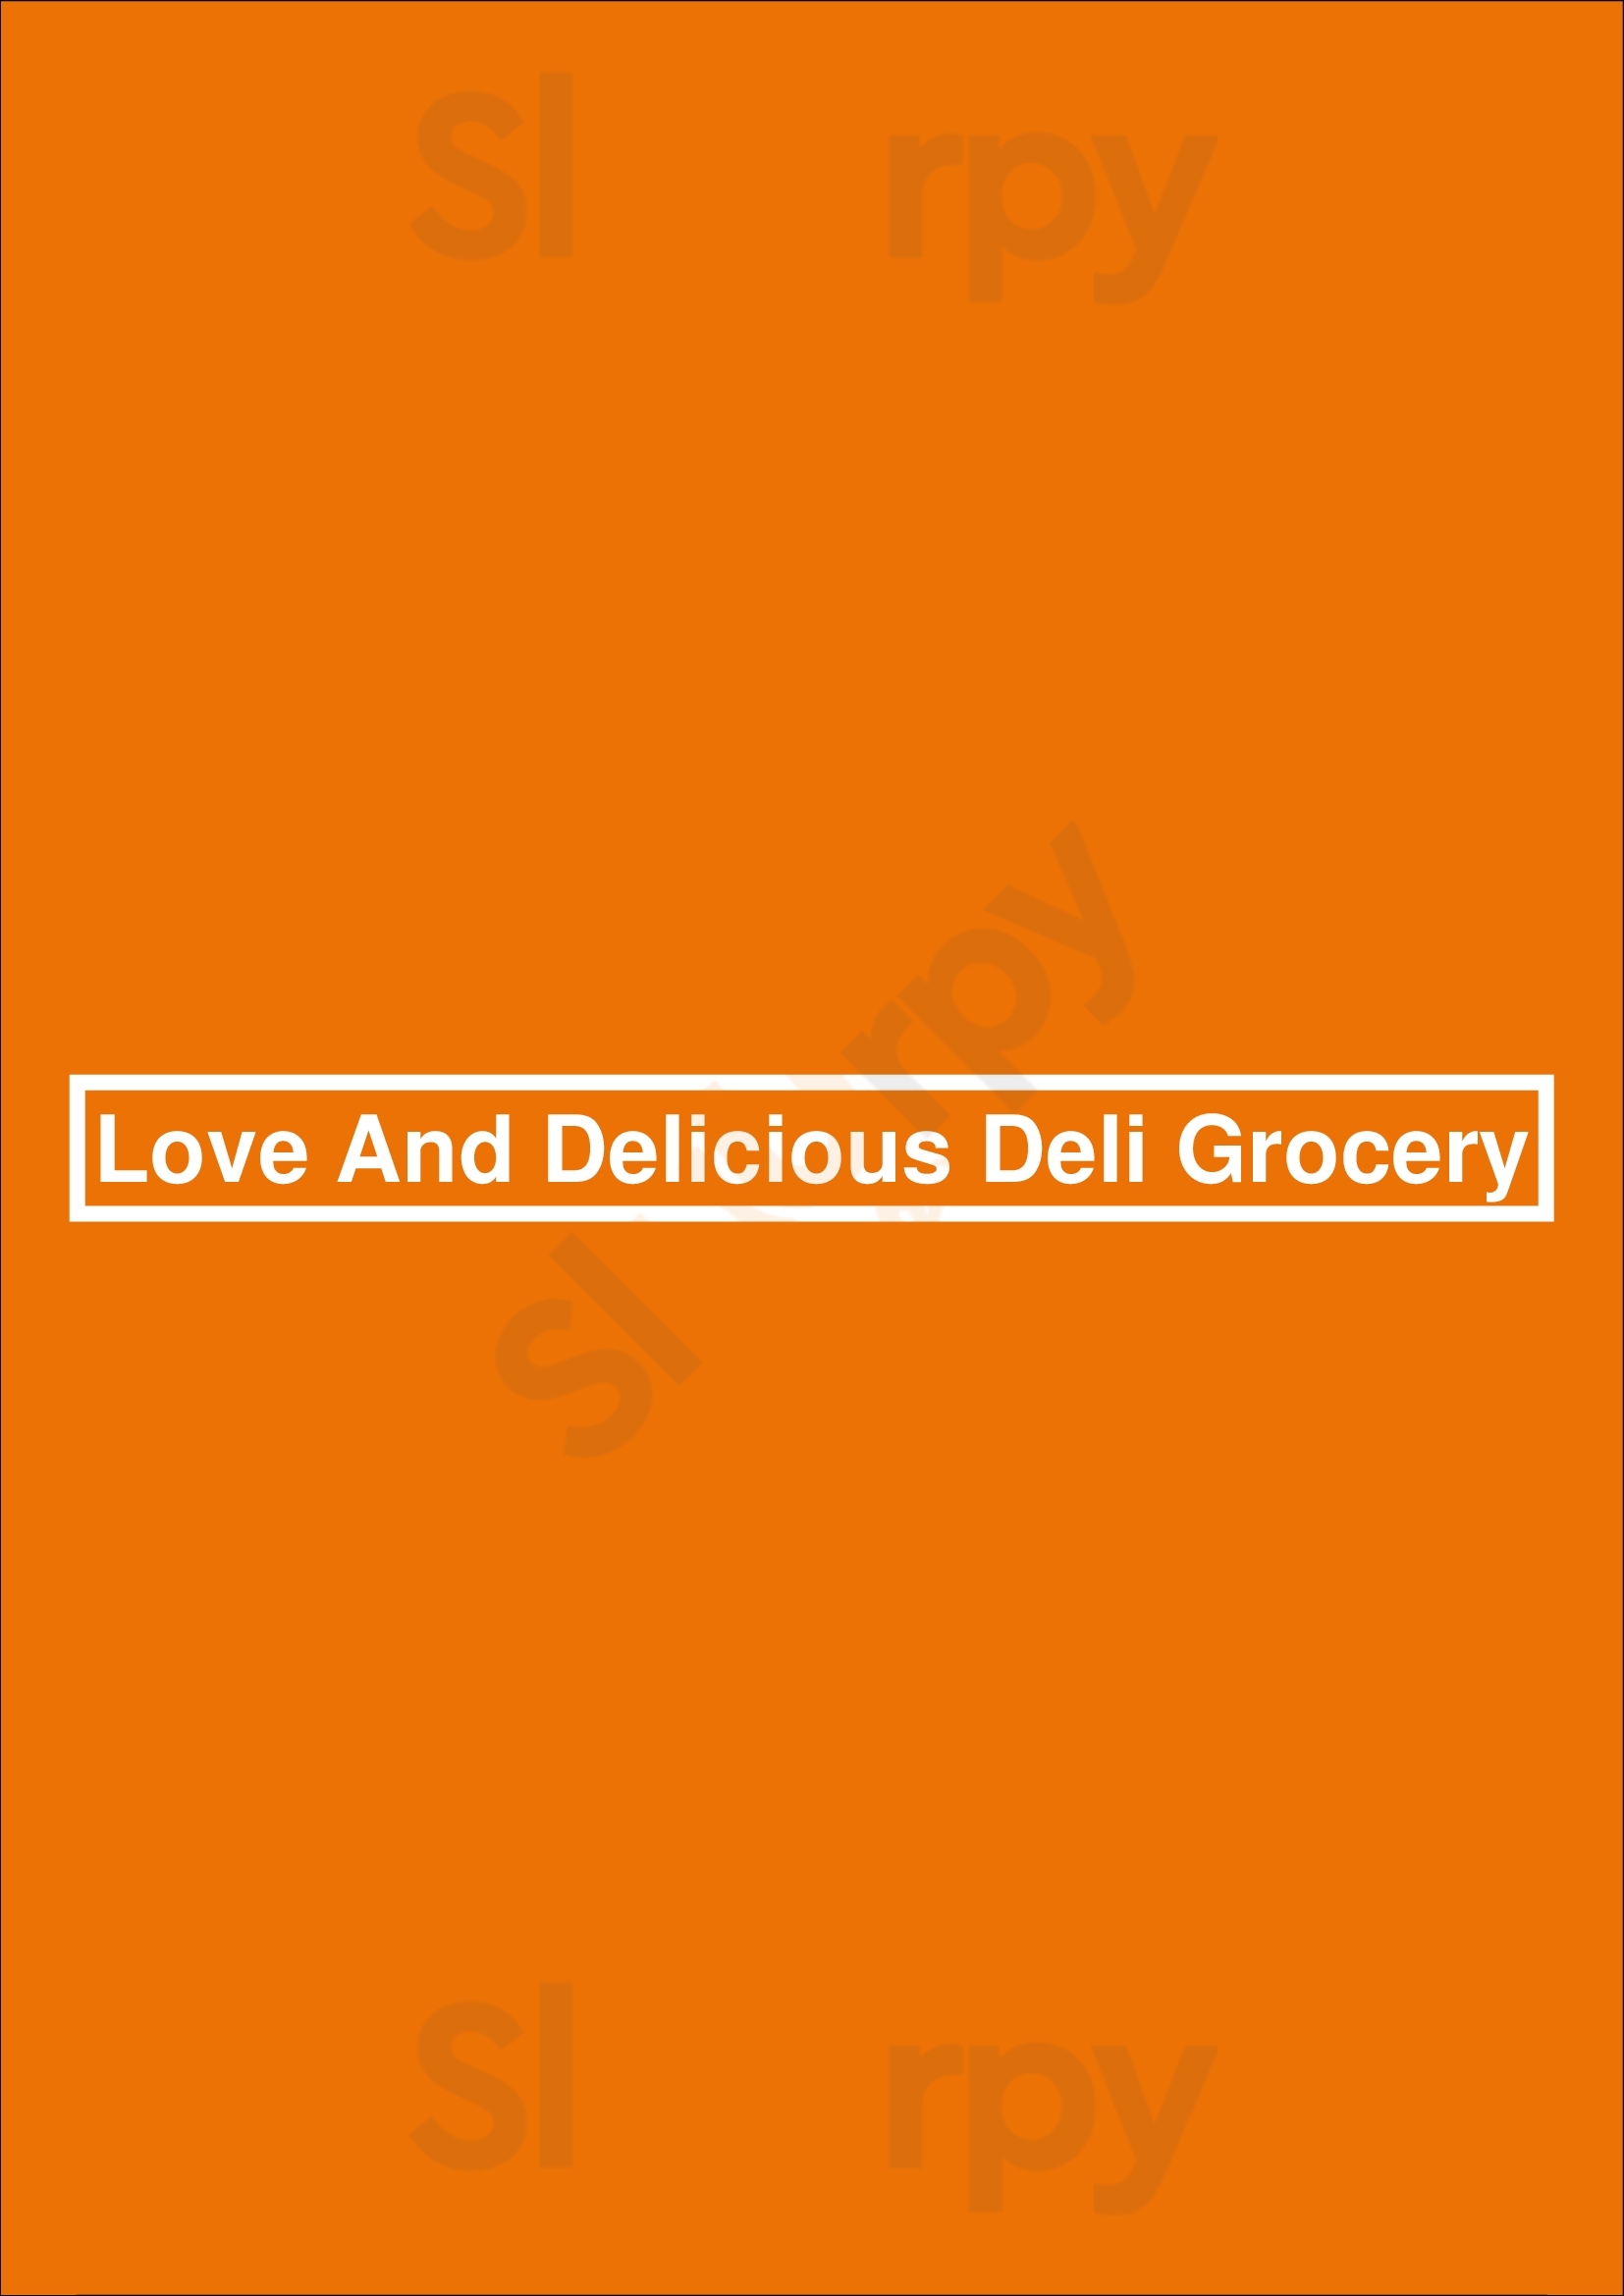 Love And Delicious Deli Grocery Brooklyn Menu - 1